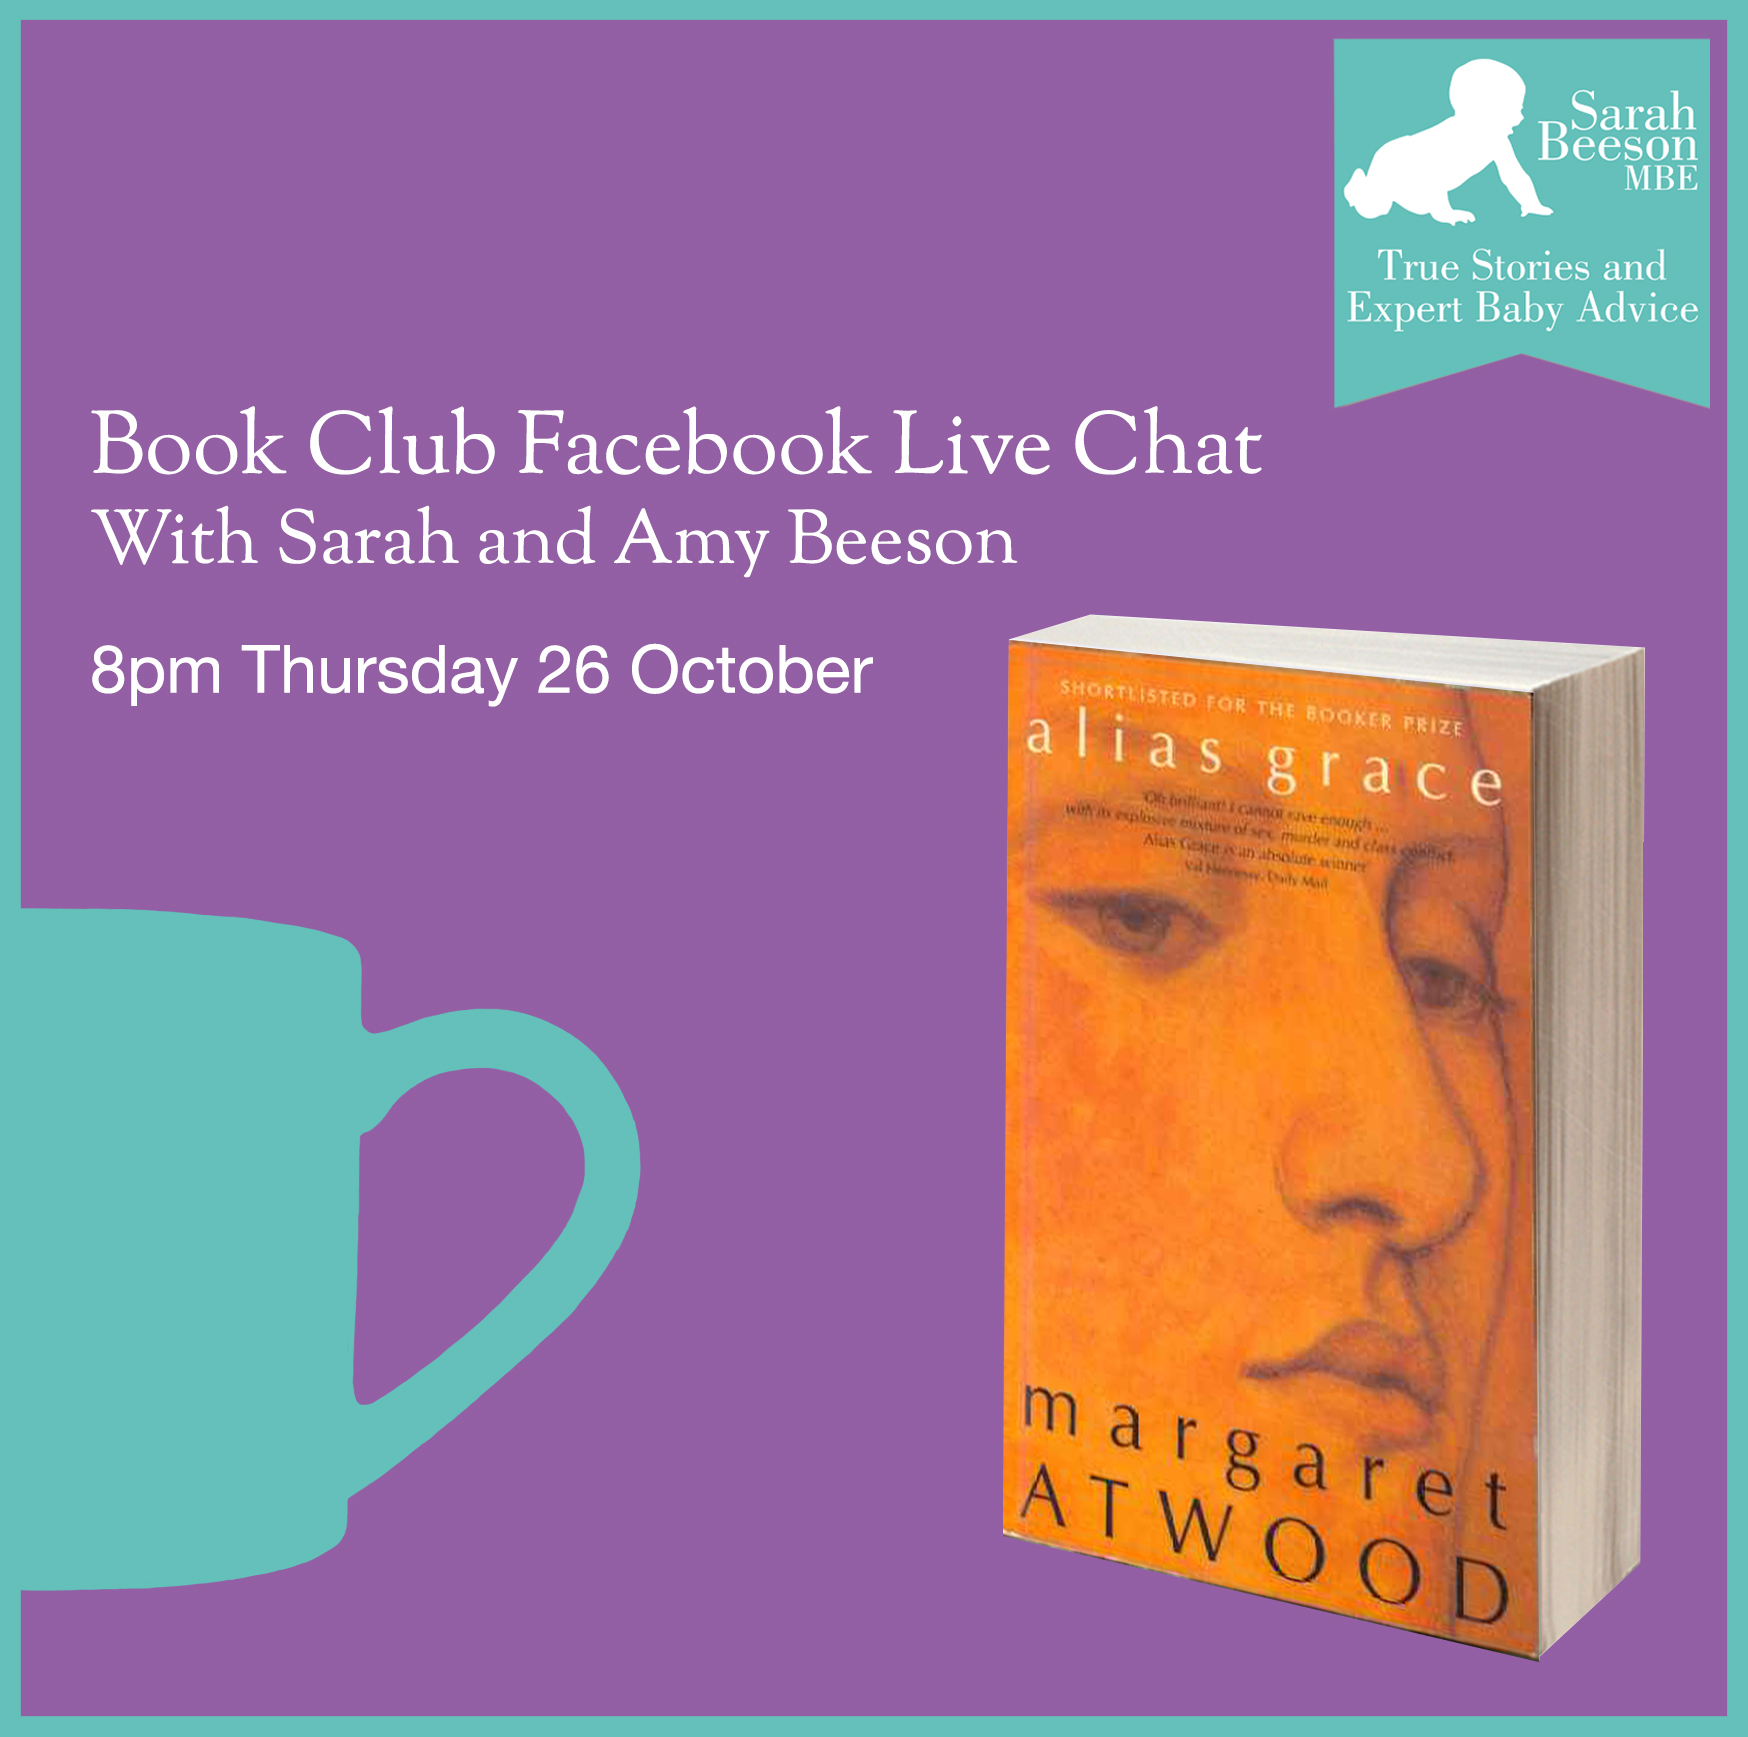 ‘Alias Grace’ by Margaret Atwood #BookReview #BookBloggers @MargaretAtwood @ViragoBooks #AliasGrace